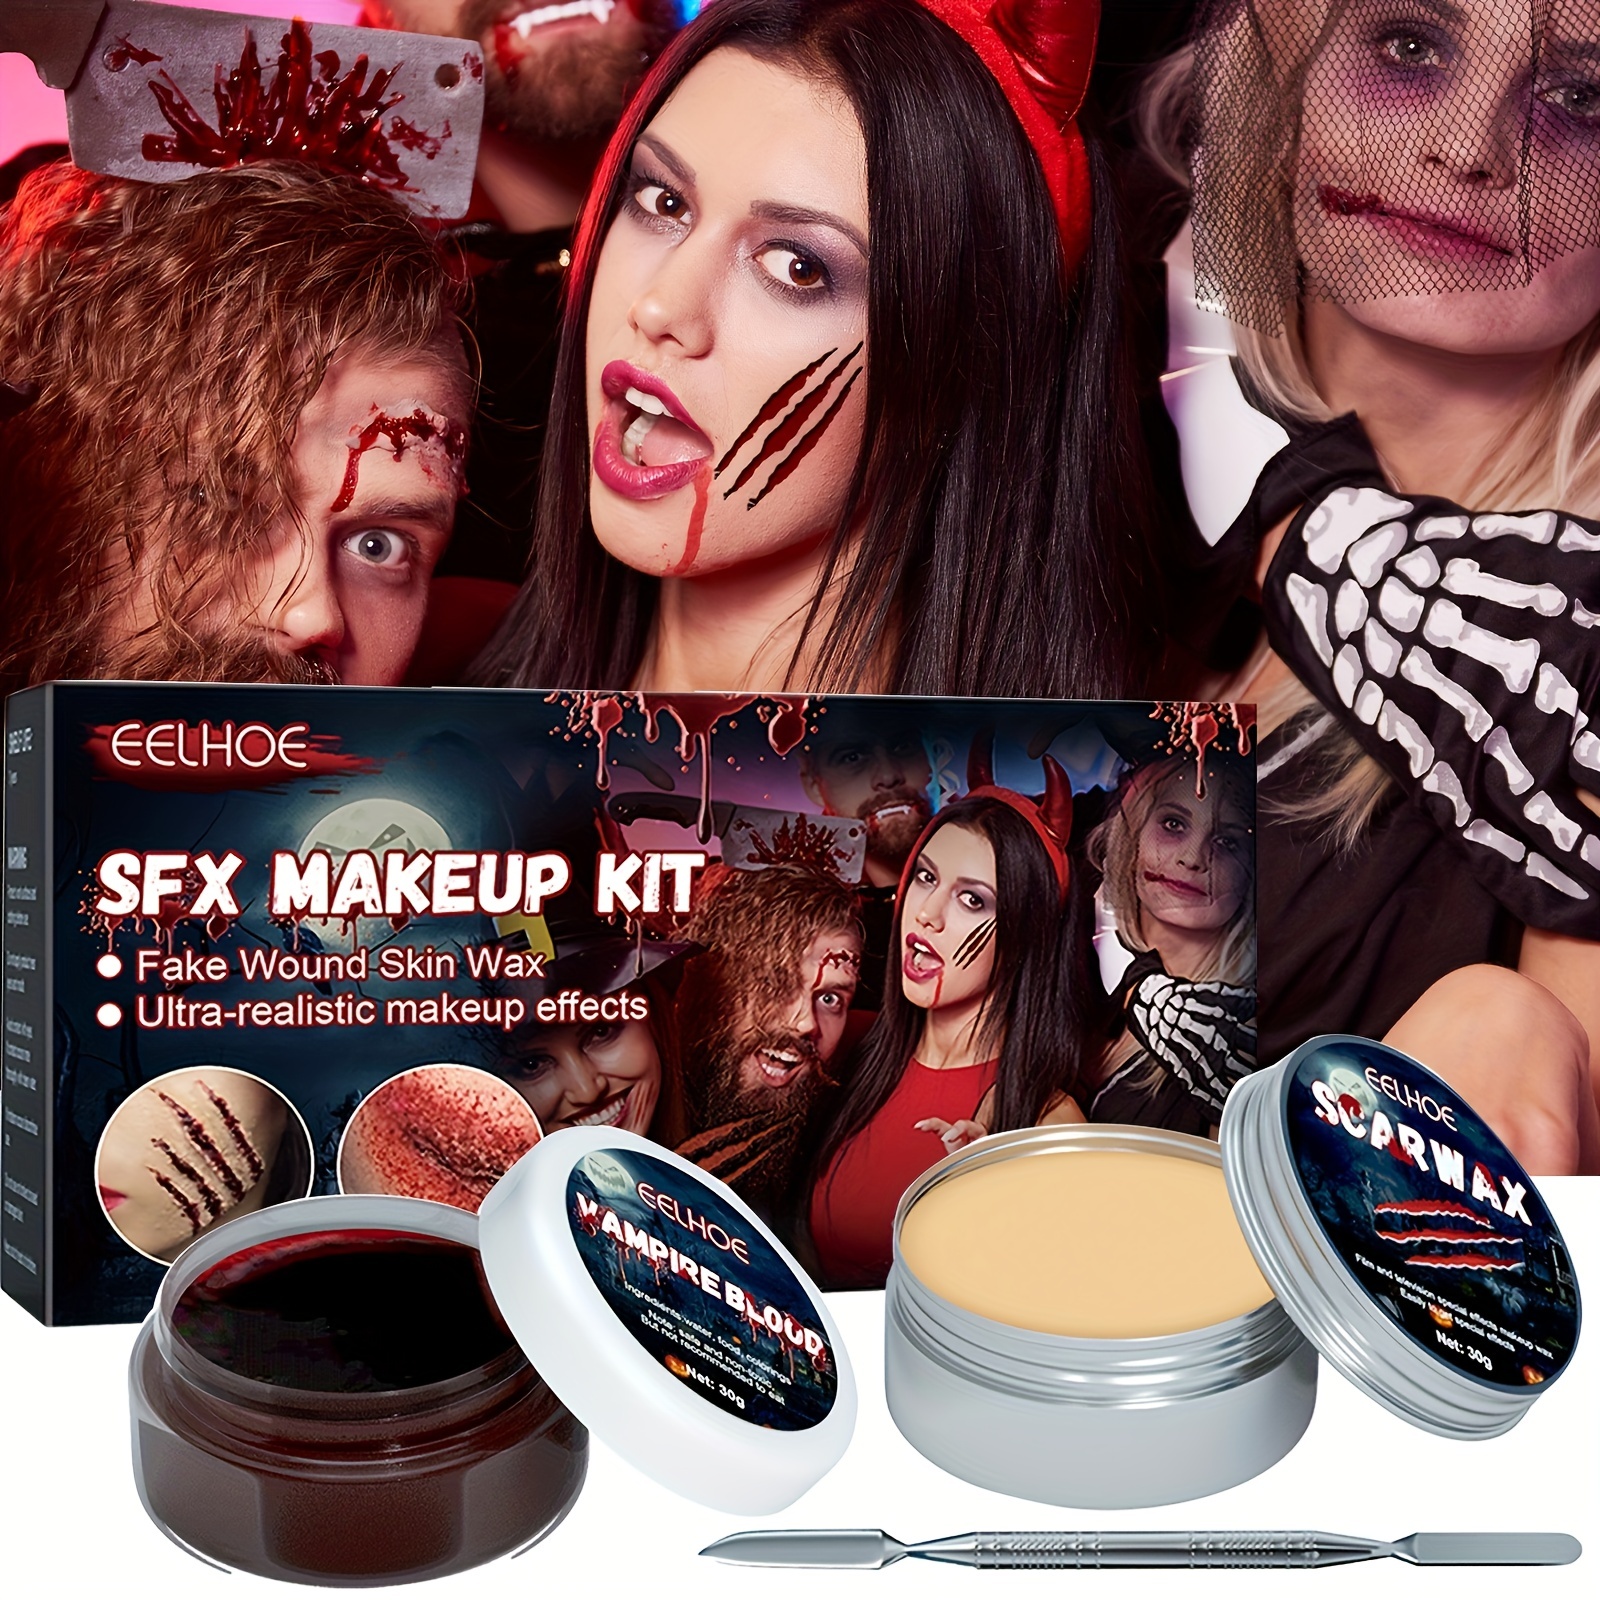 SFX Makeup Kit Scars Wax, Halloween Skin wax Plasma makeup set Scar makeup  Creepy atmosphere party makeup props Wound Scar Wax, Fake Scab Blood